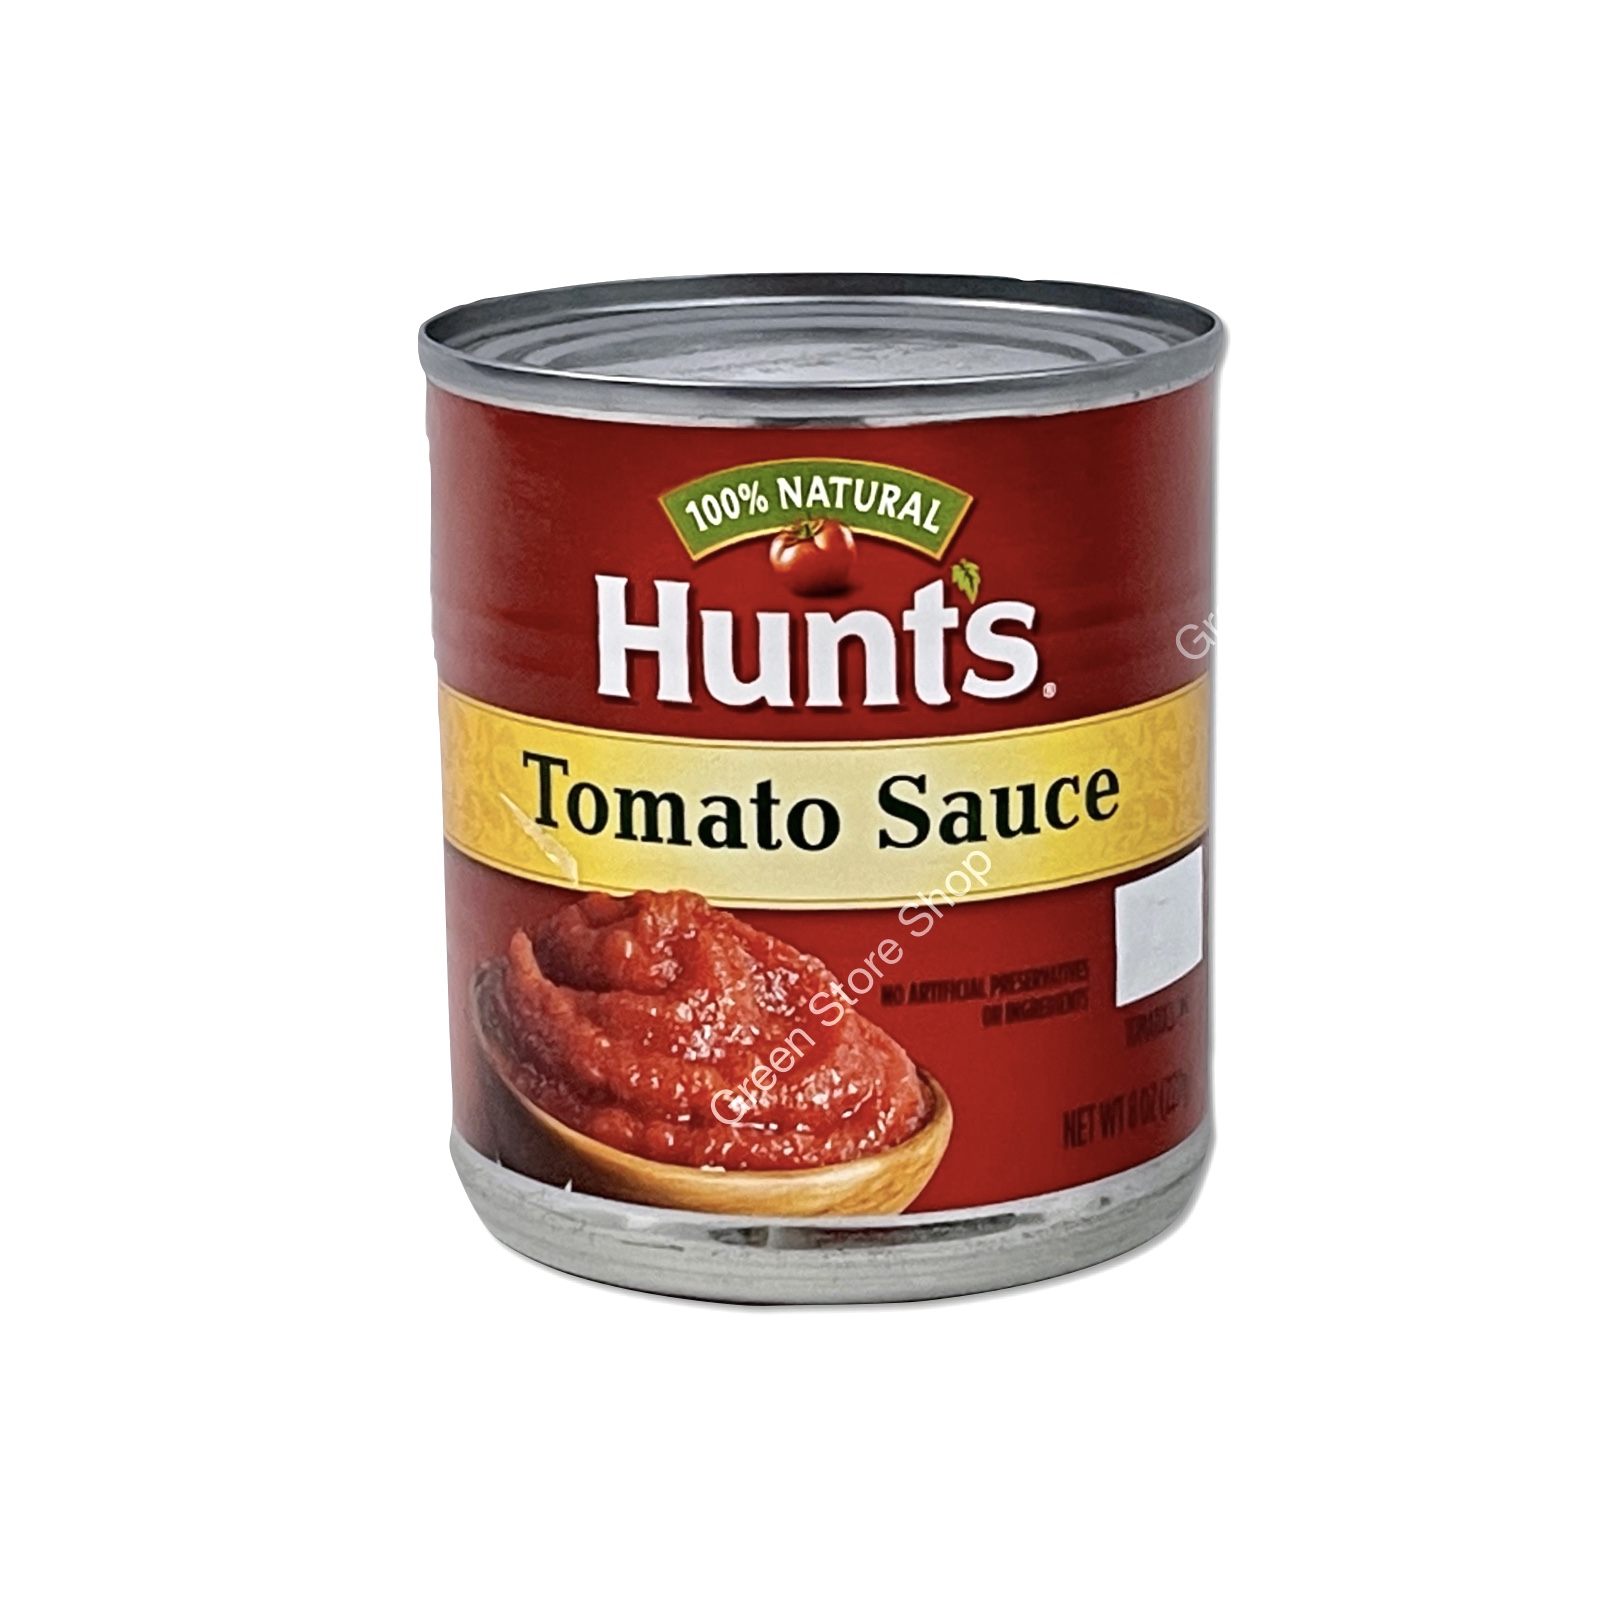 Hunts Tomato Sauce 100% Natural 227g. ( ซอสมะเขือเทศ )